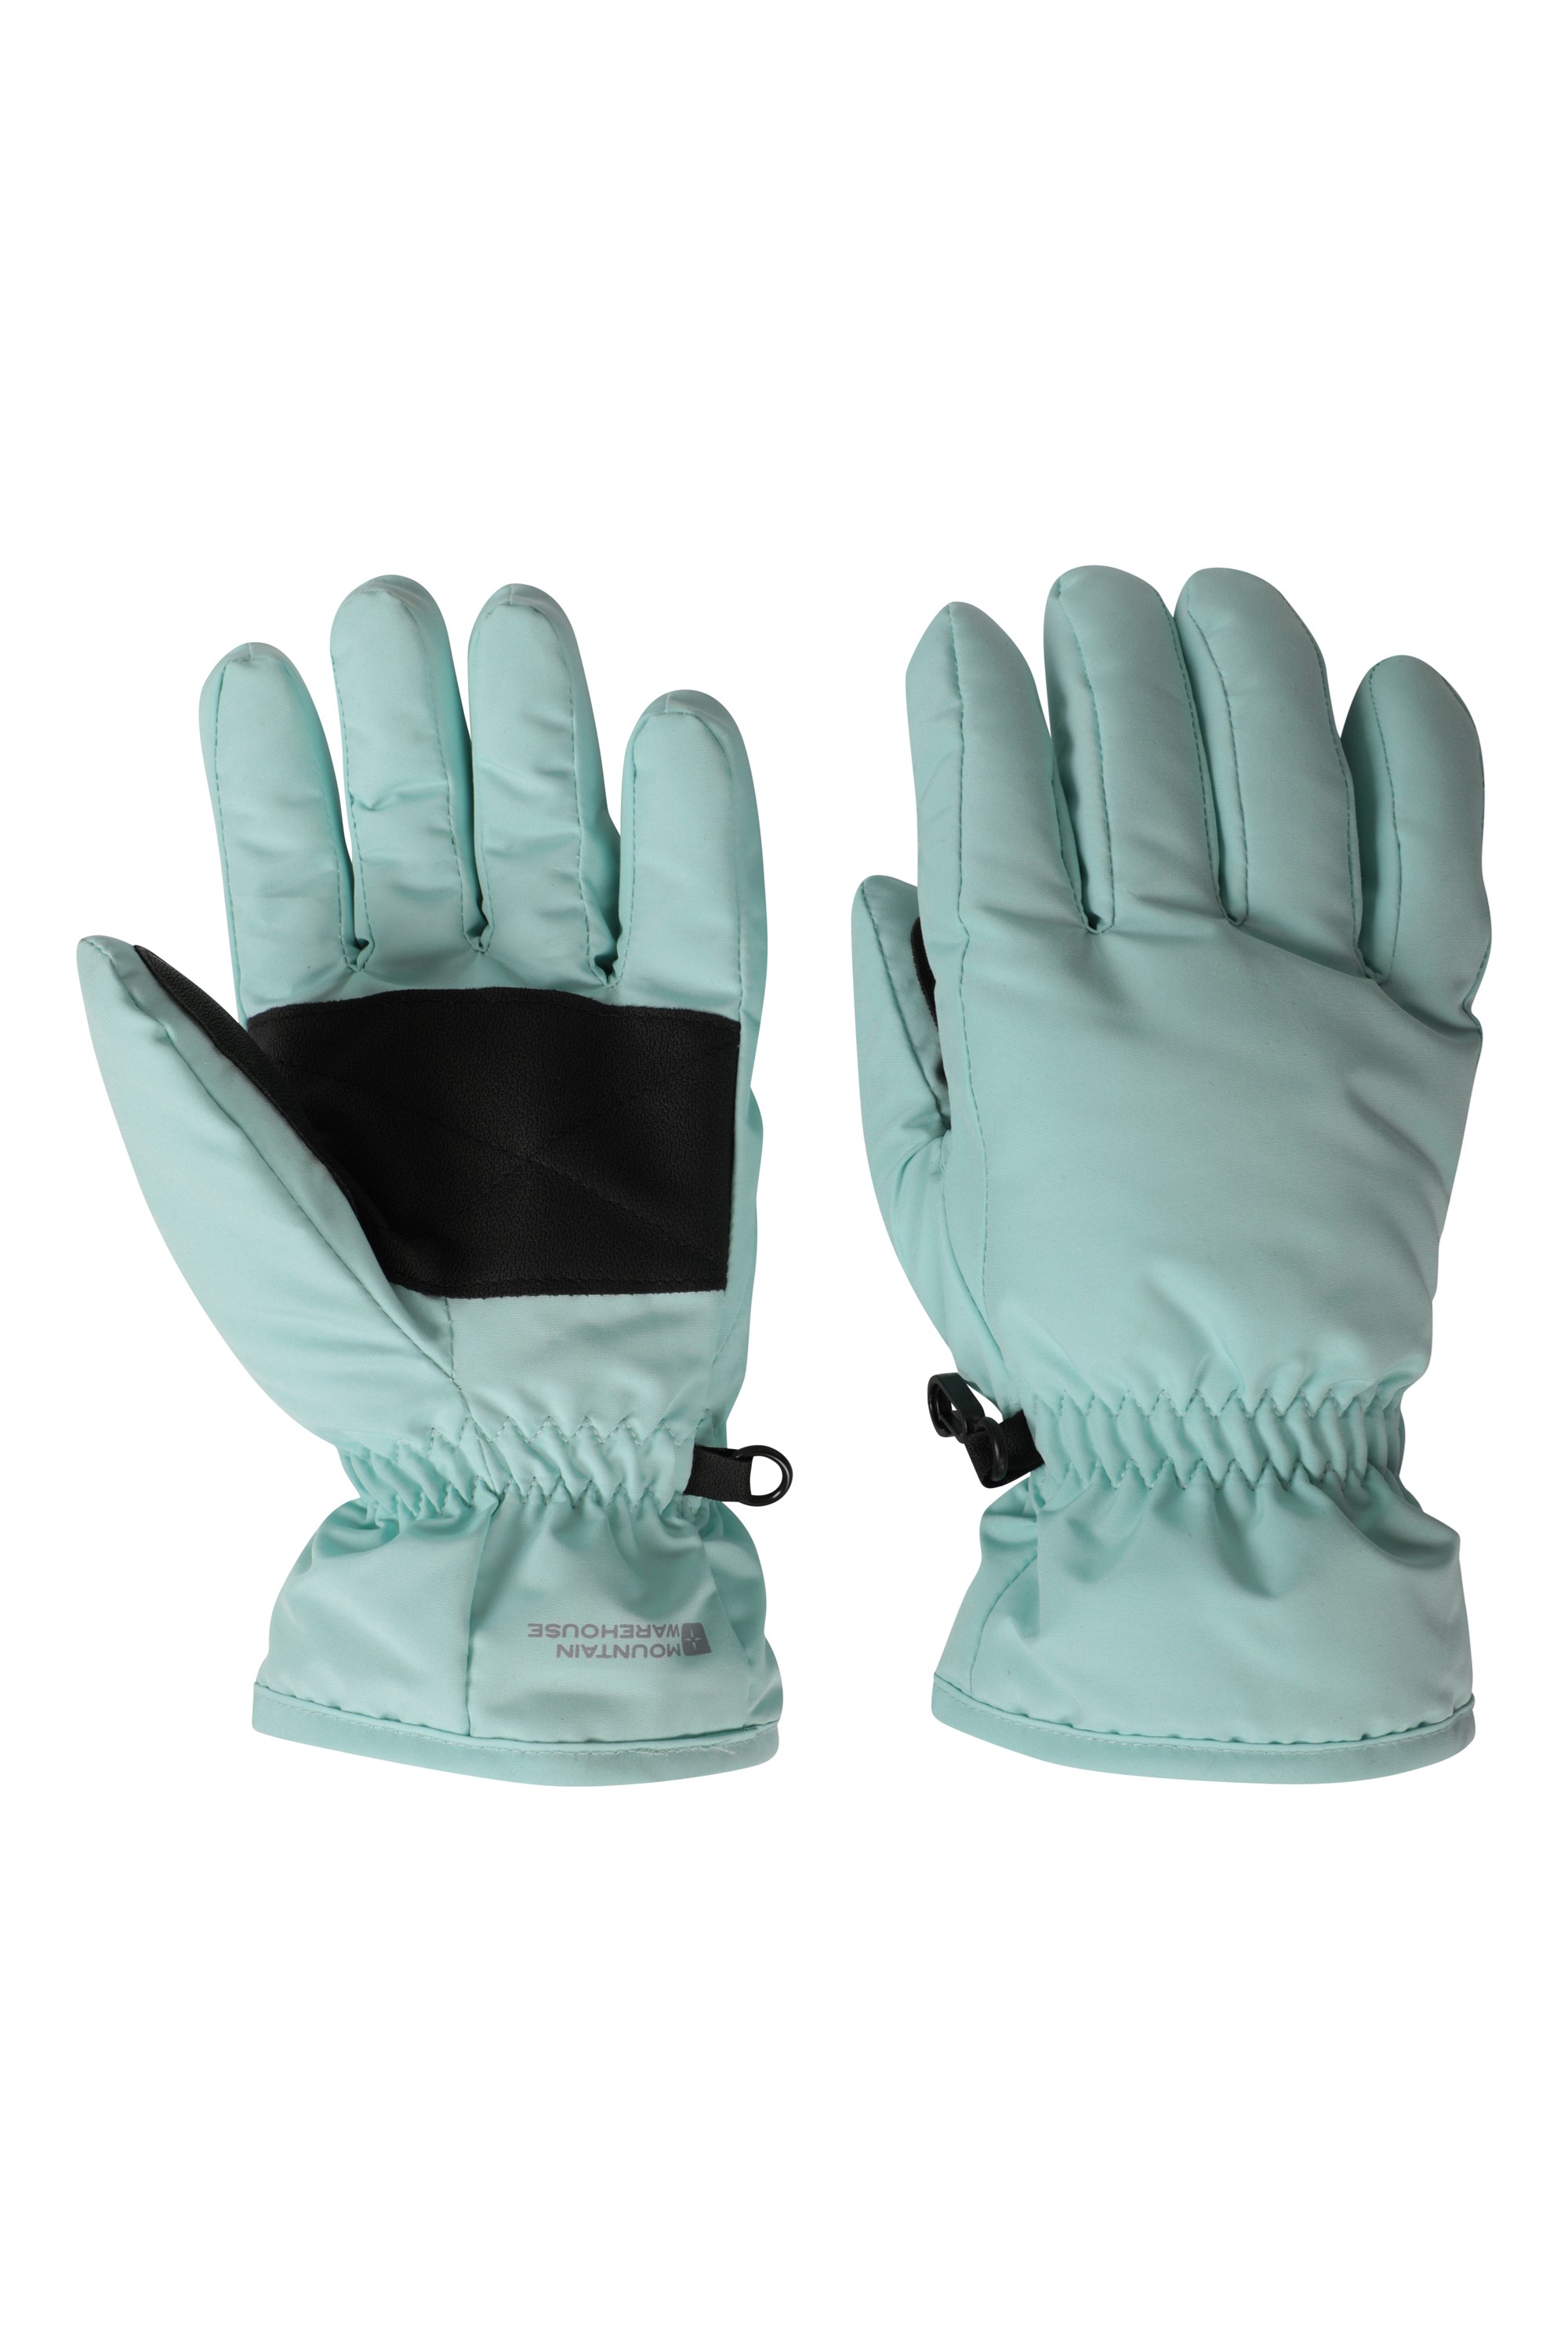 Adjustable Cuffs Snow Proof Ski Gloves Fleece Lined Mountain Warehouse Kids Snow Mittens 